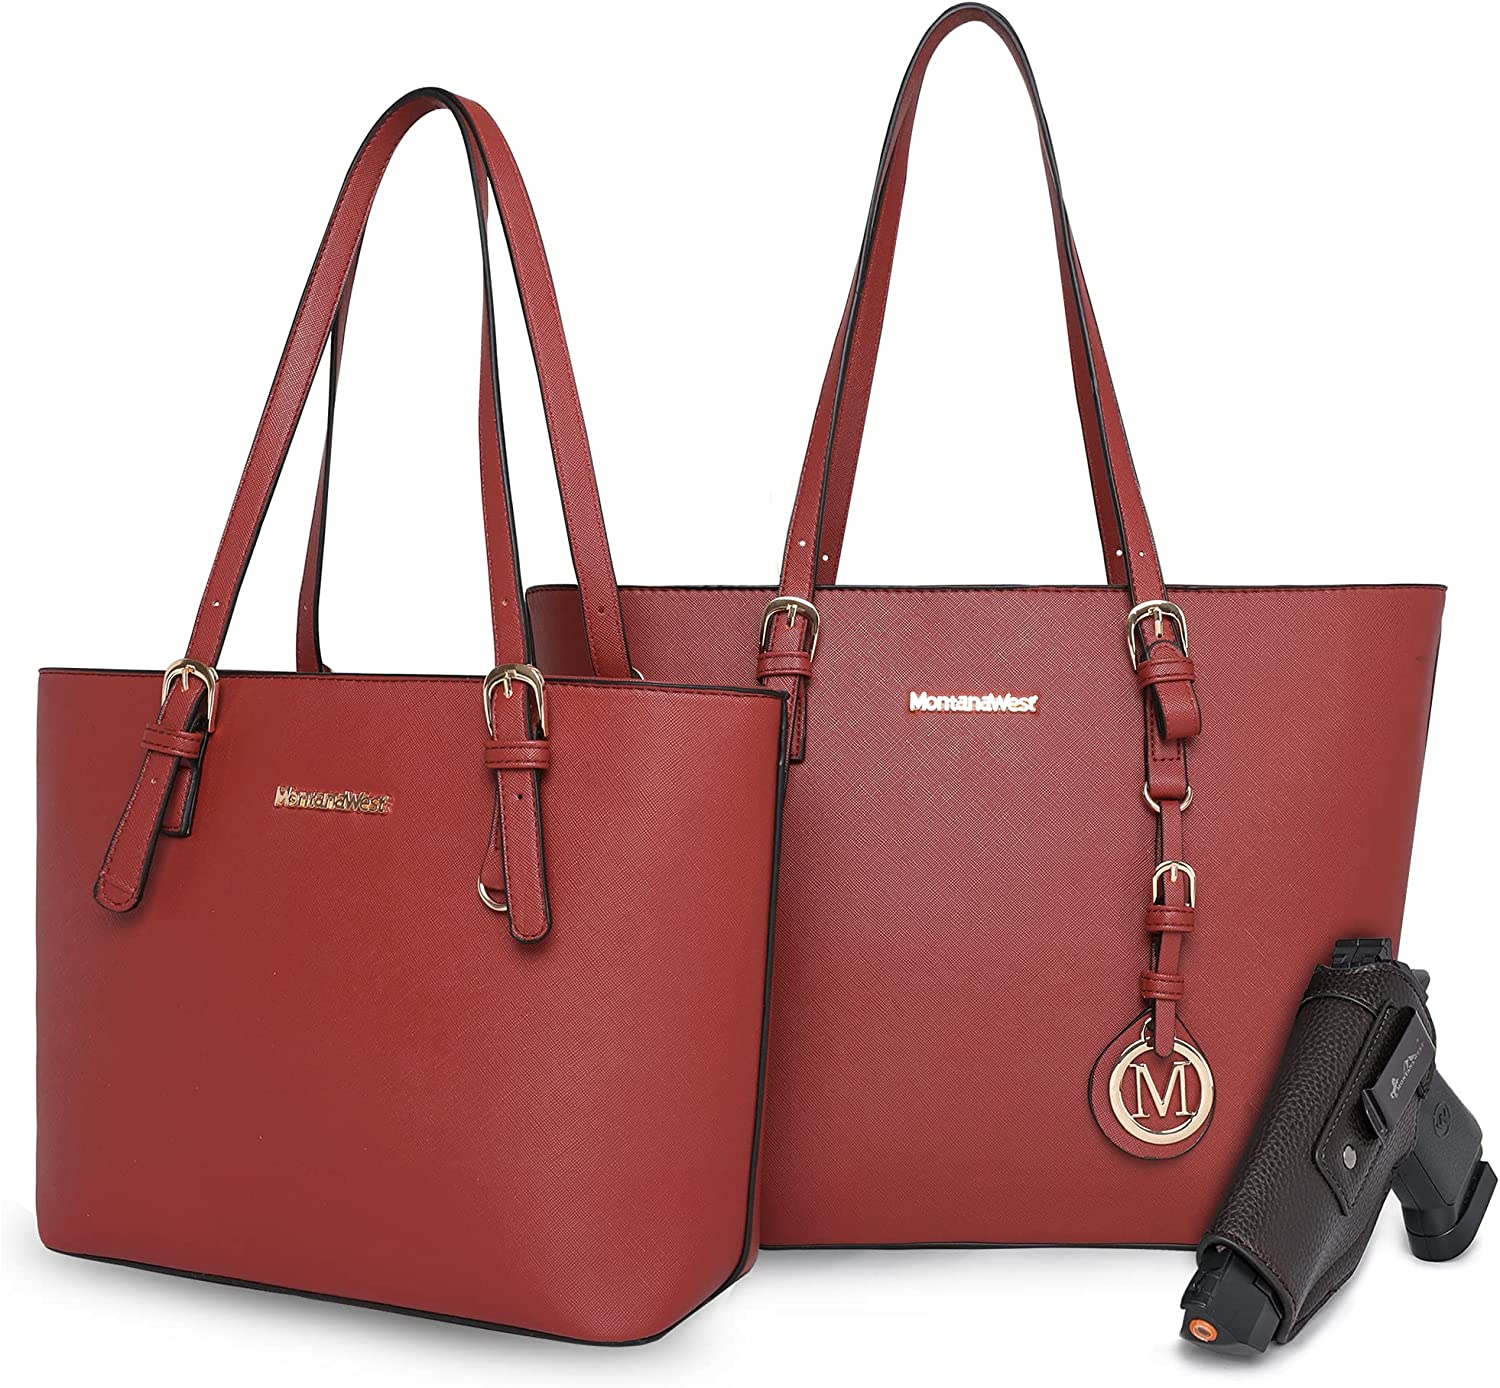 Portable Women's Bag - Buy 1 & Get 1 Free – Great Happy IN